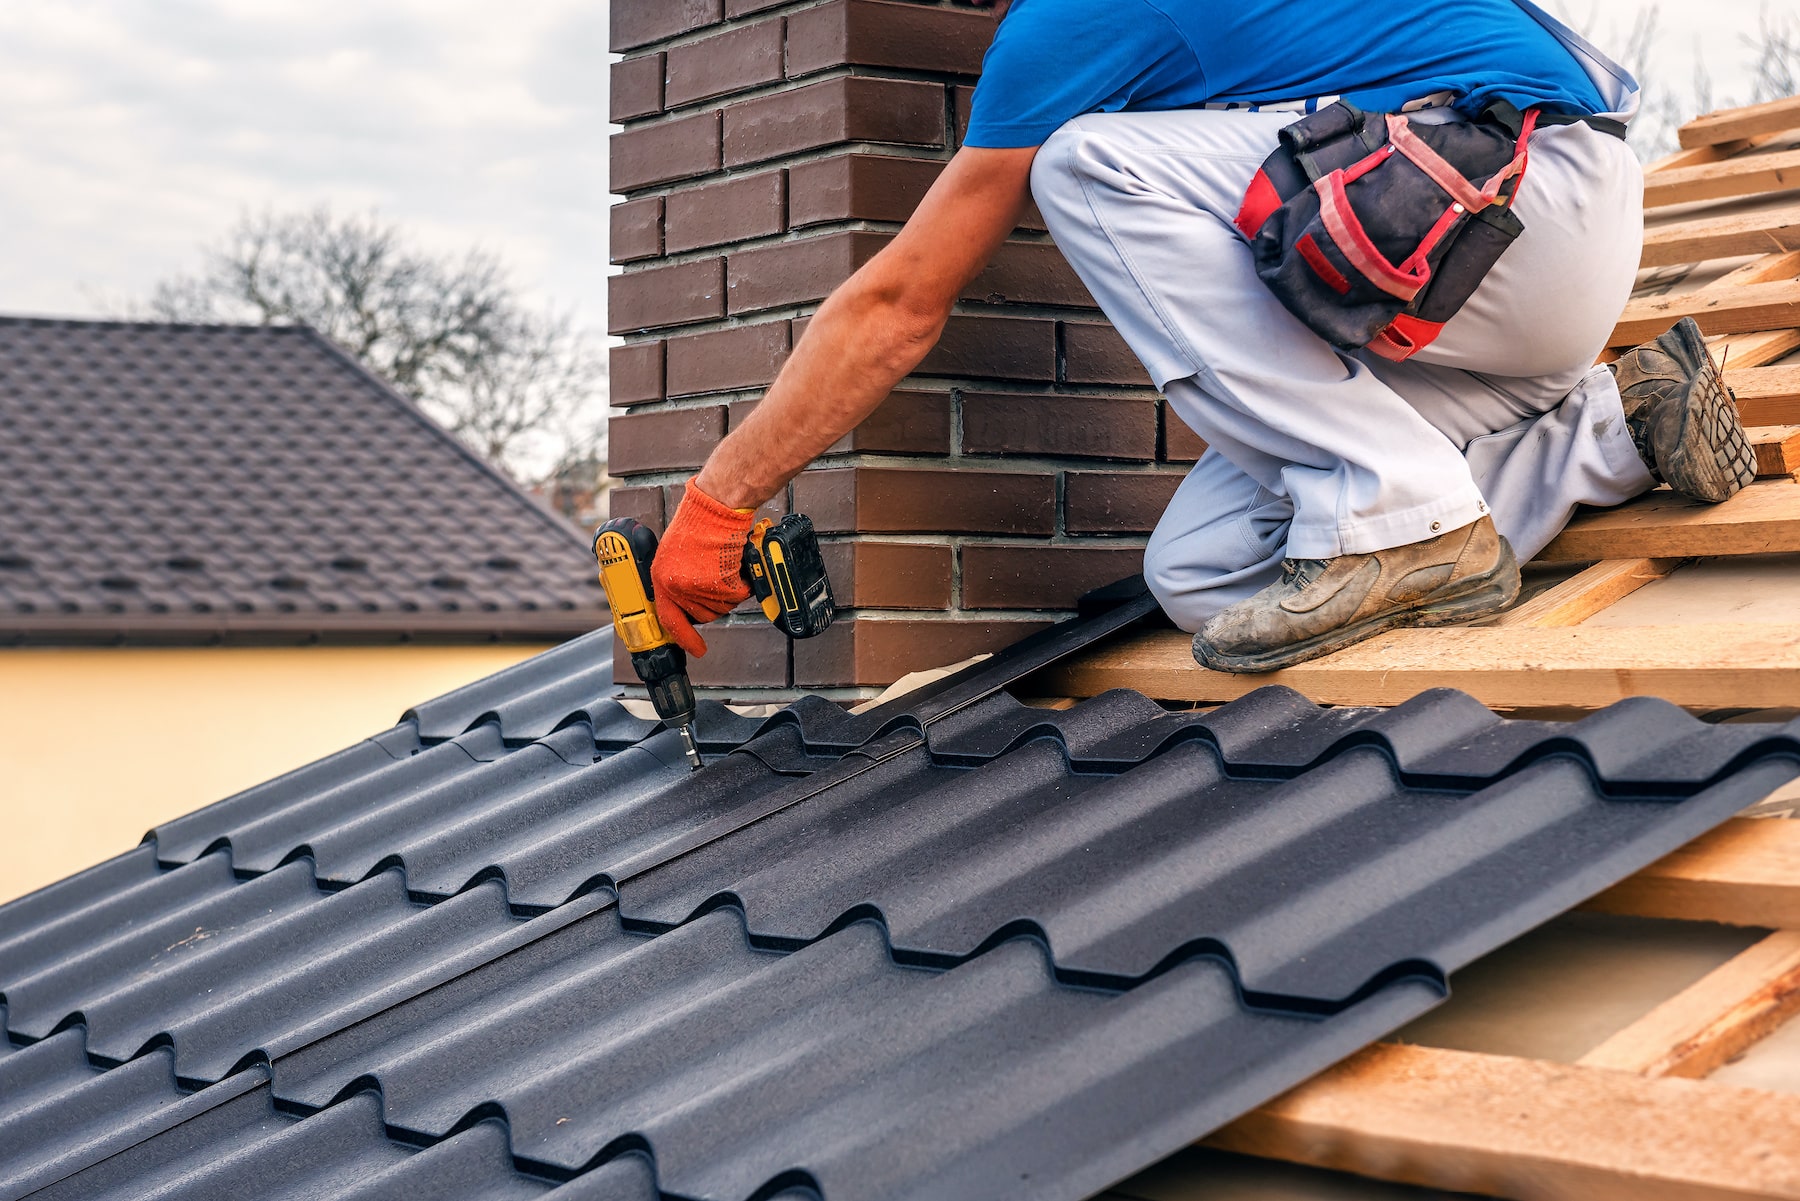 Worker fastening fire-resistant metal roof